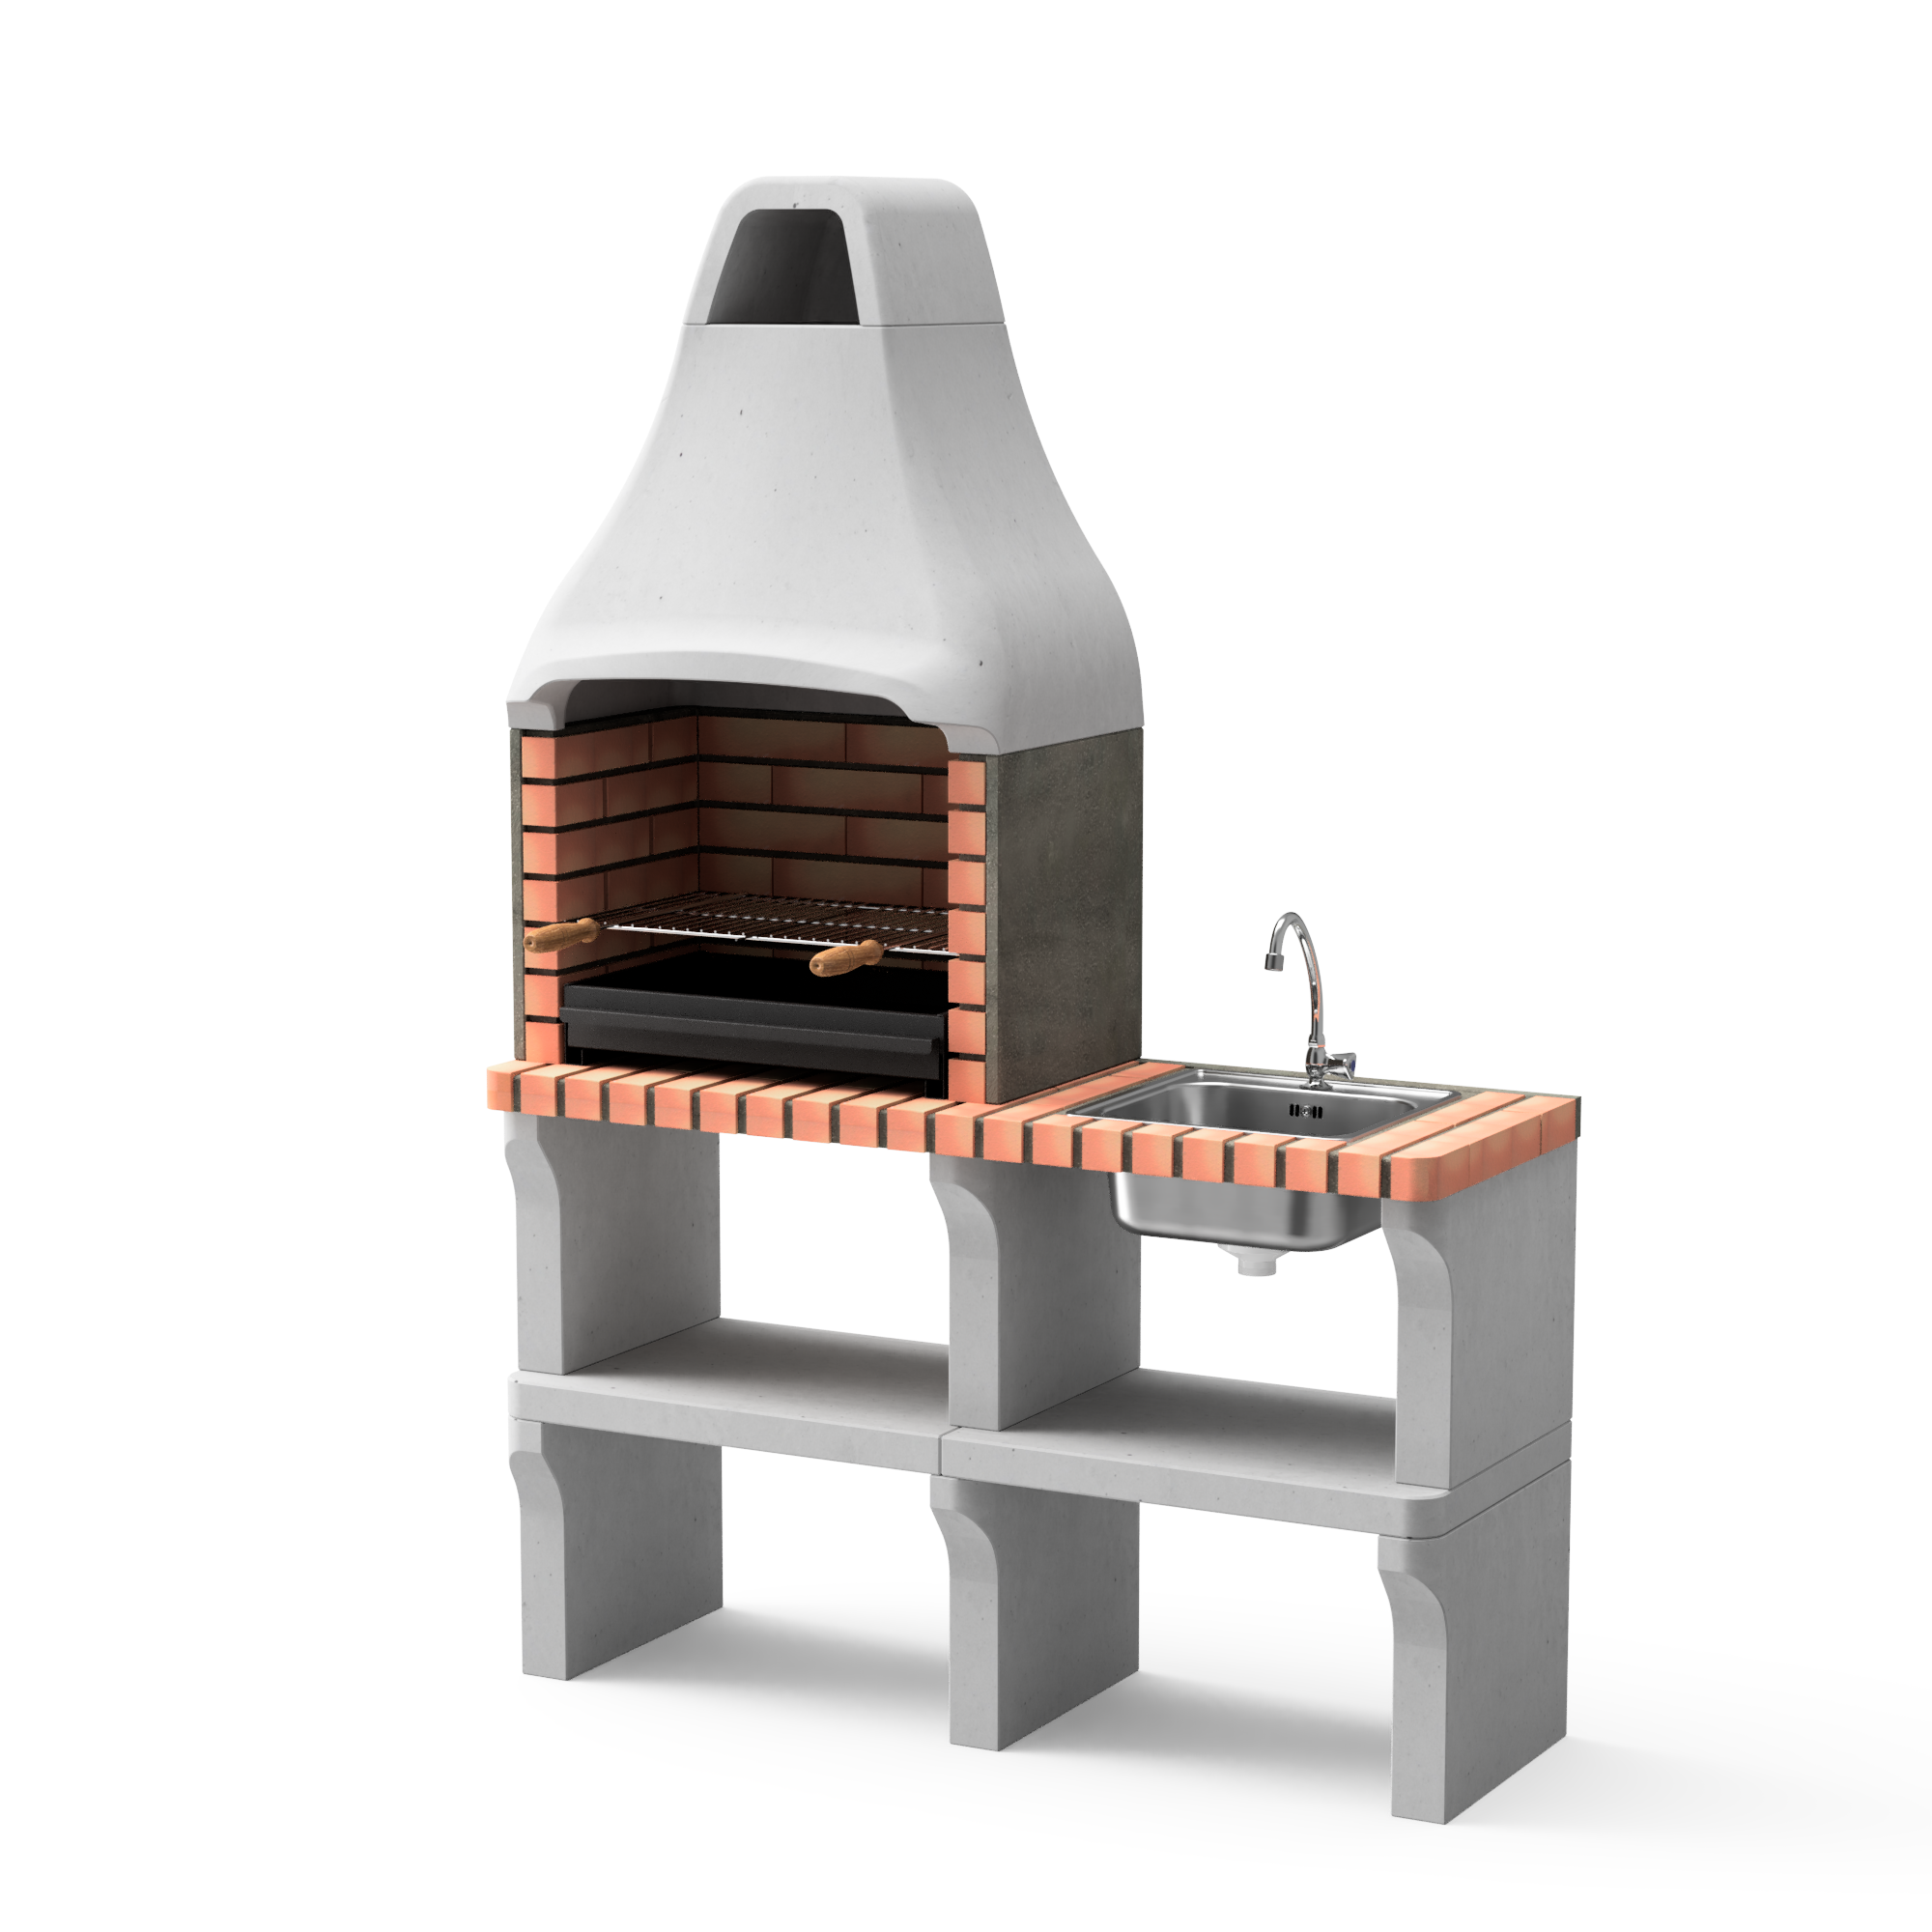 Barbecue new iberia plus xl module avec évier & robinet